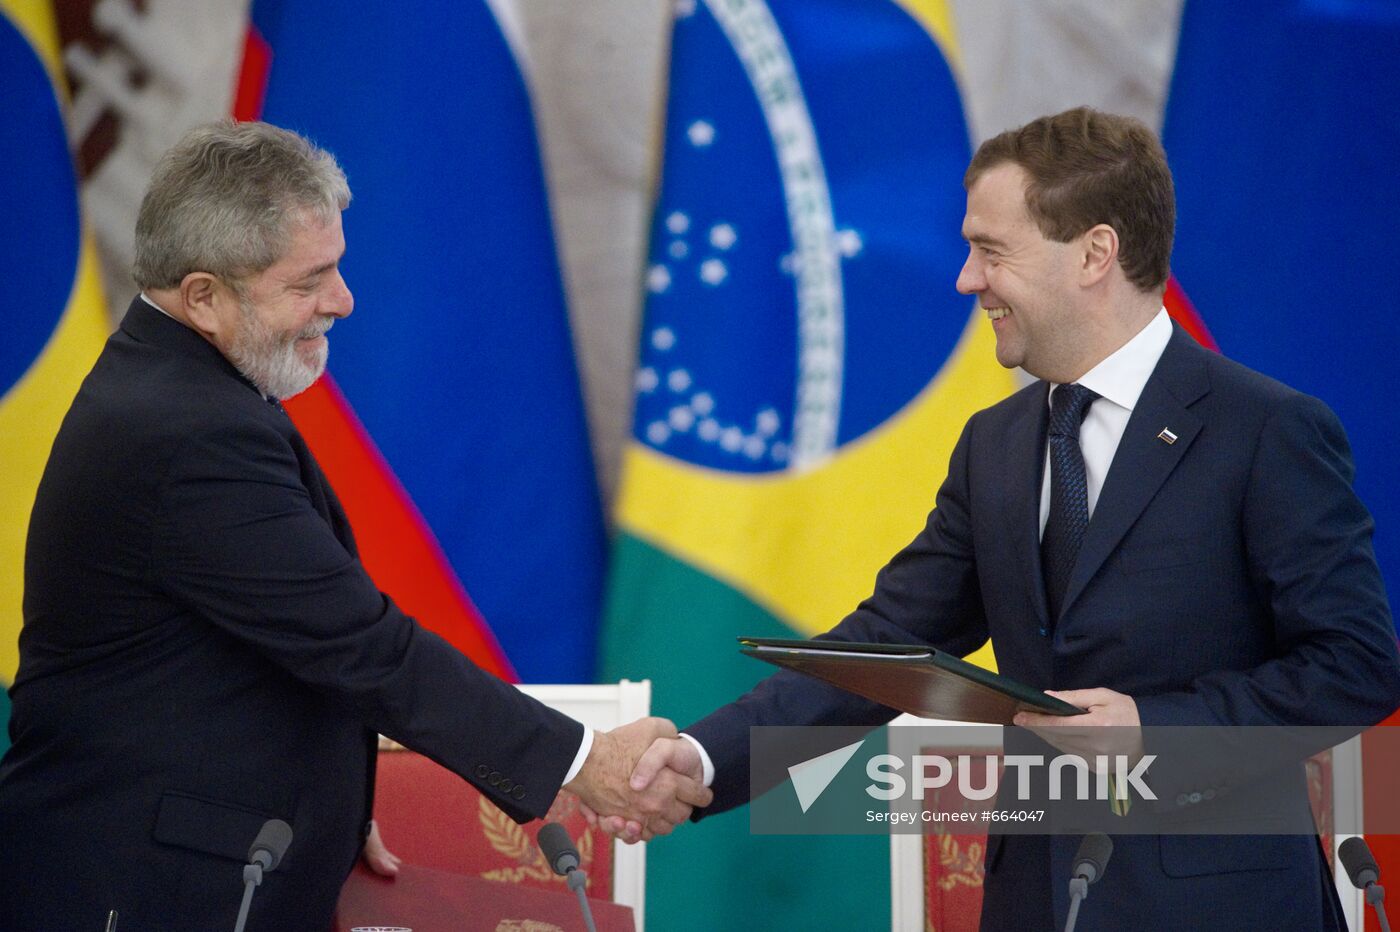 Official visit by Luiz Inacio Lula da Silva to Russia